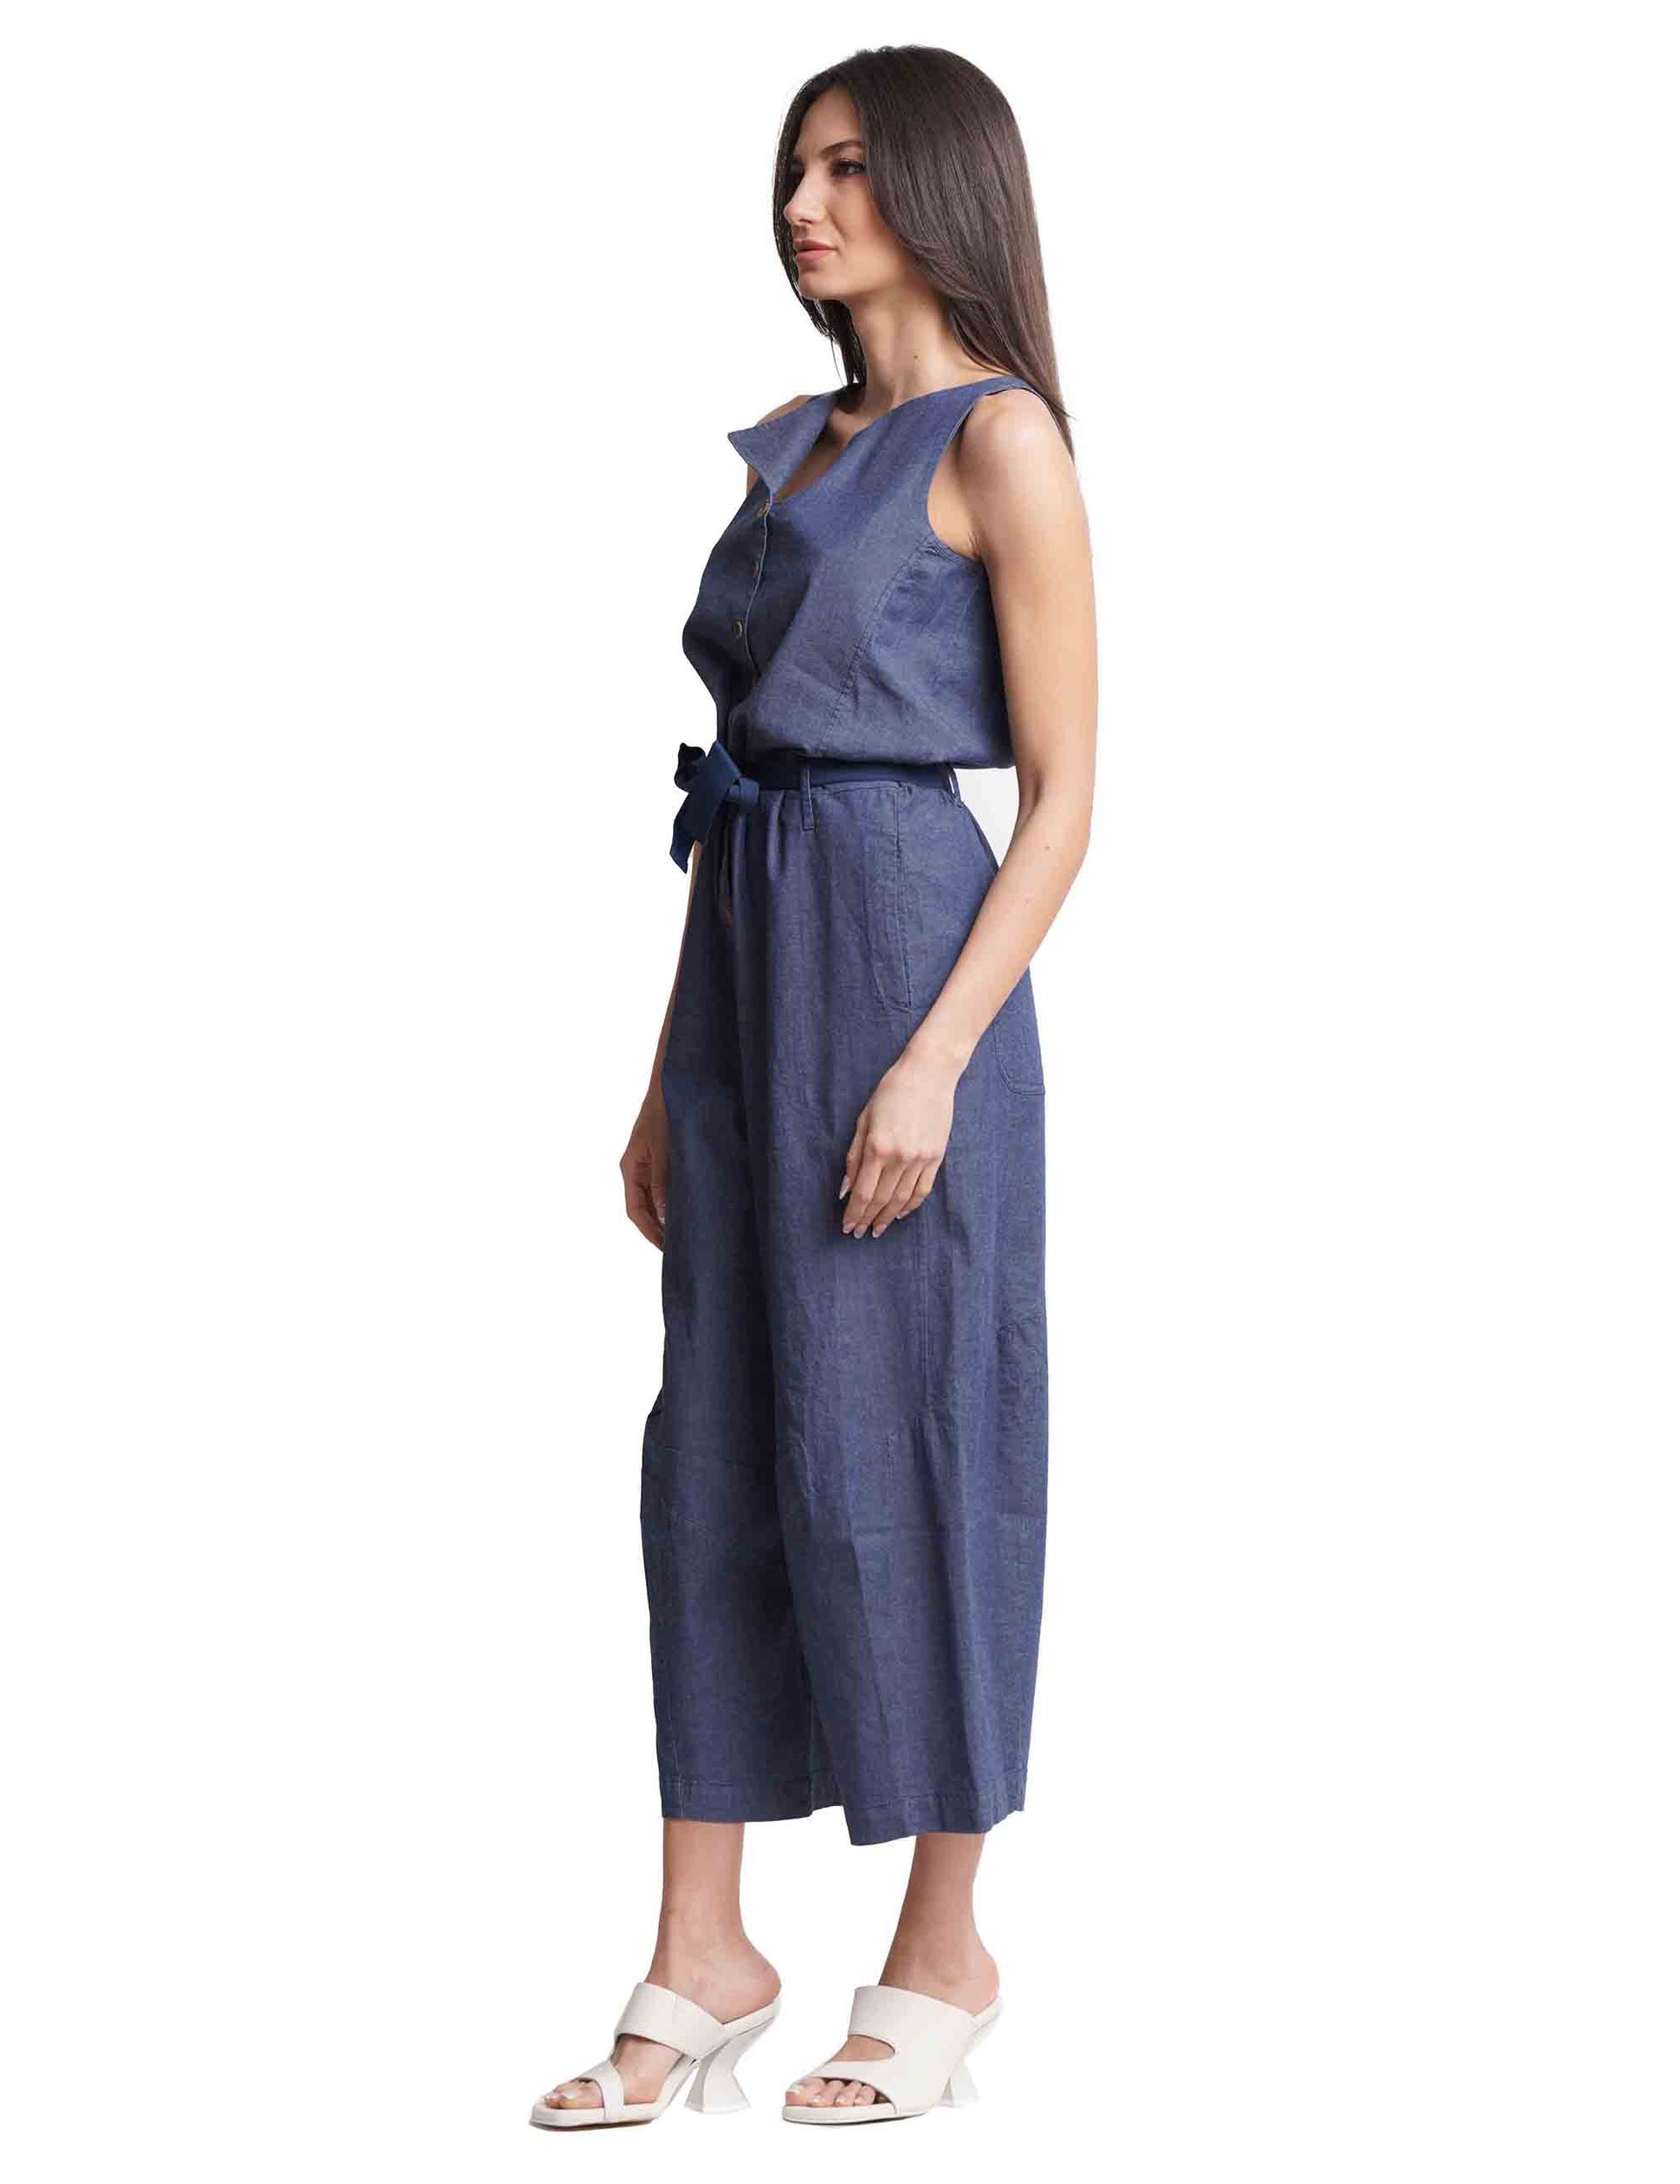 Women's blue cotton tracksuit dresses with sleeveless waist belt